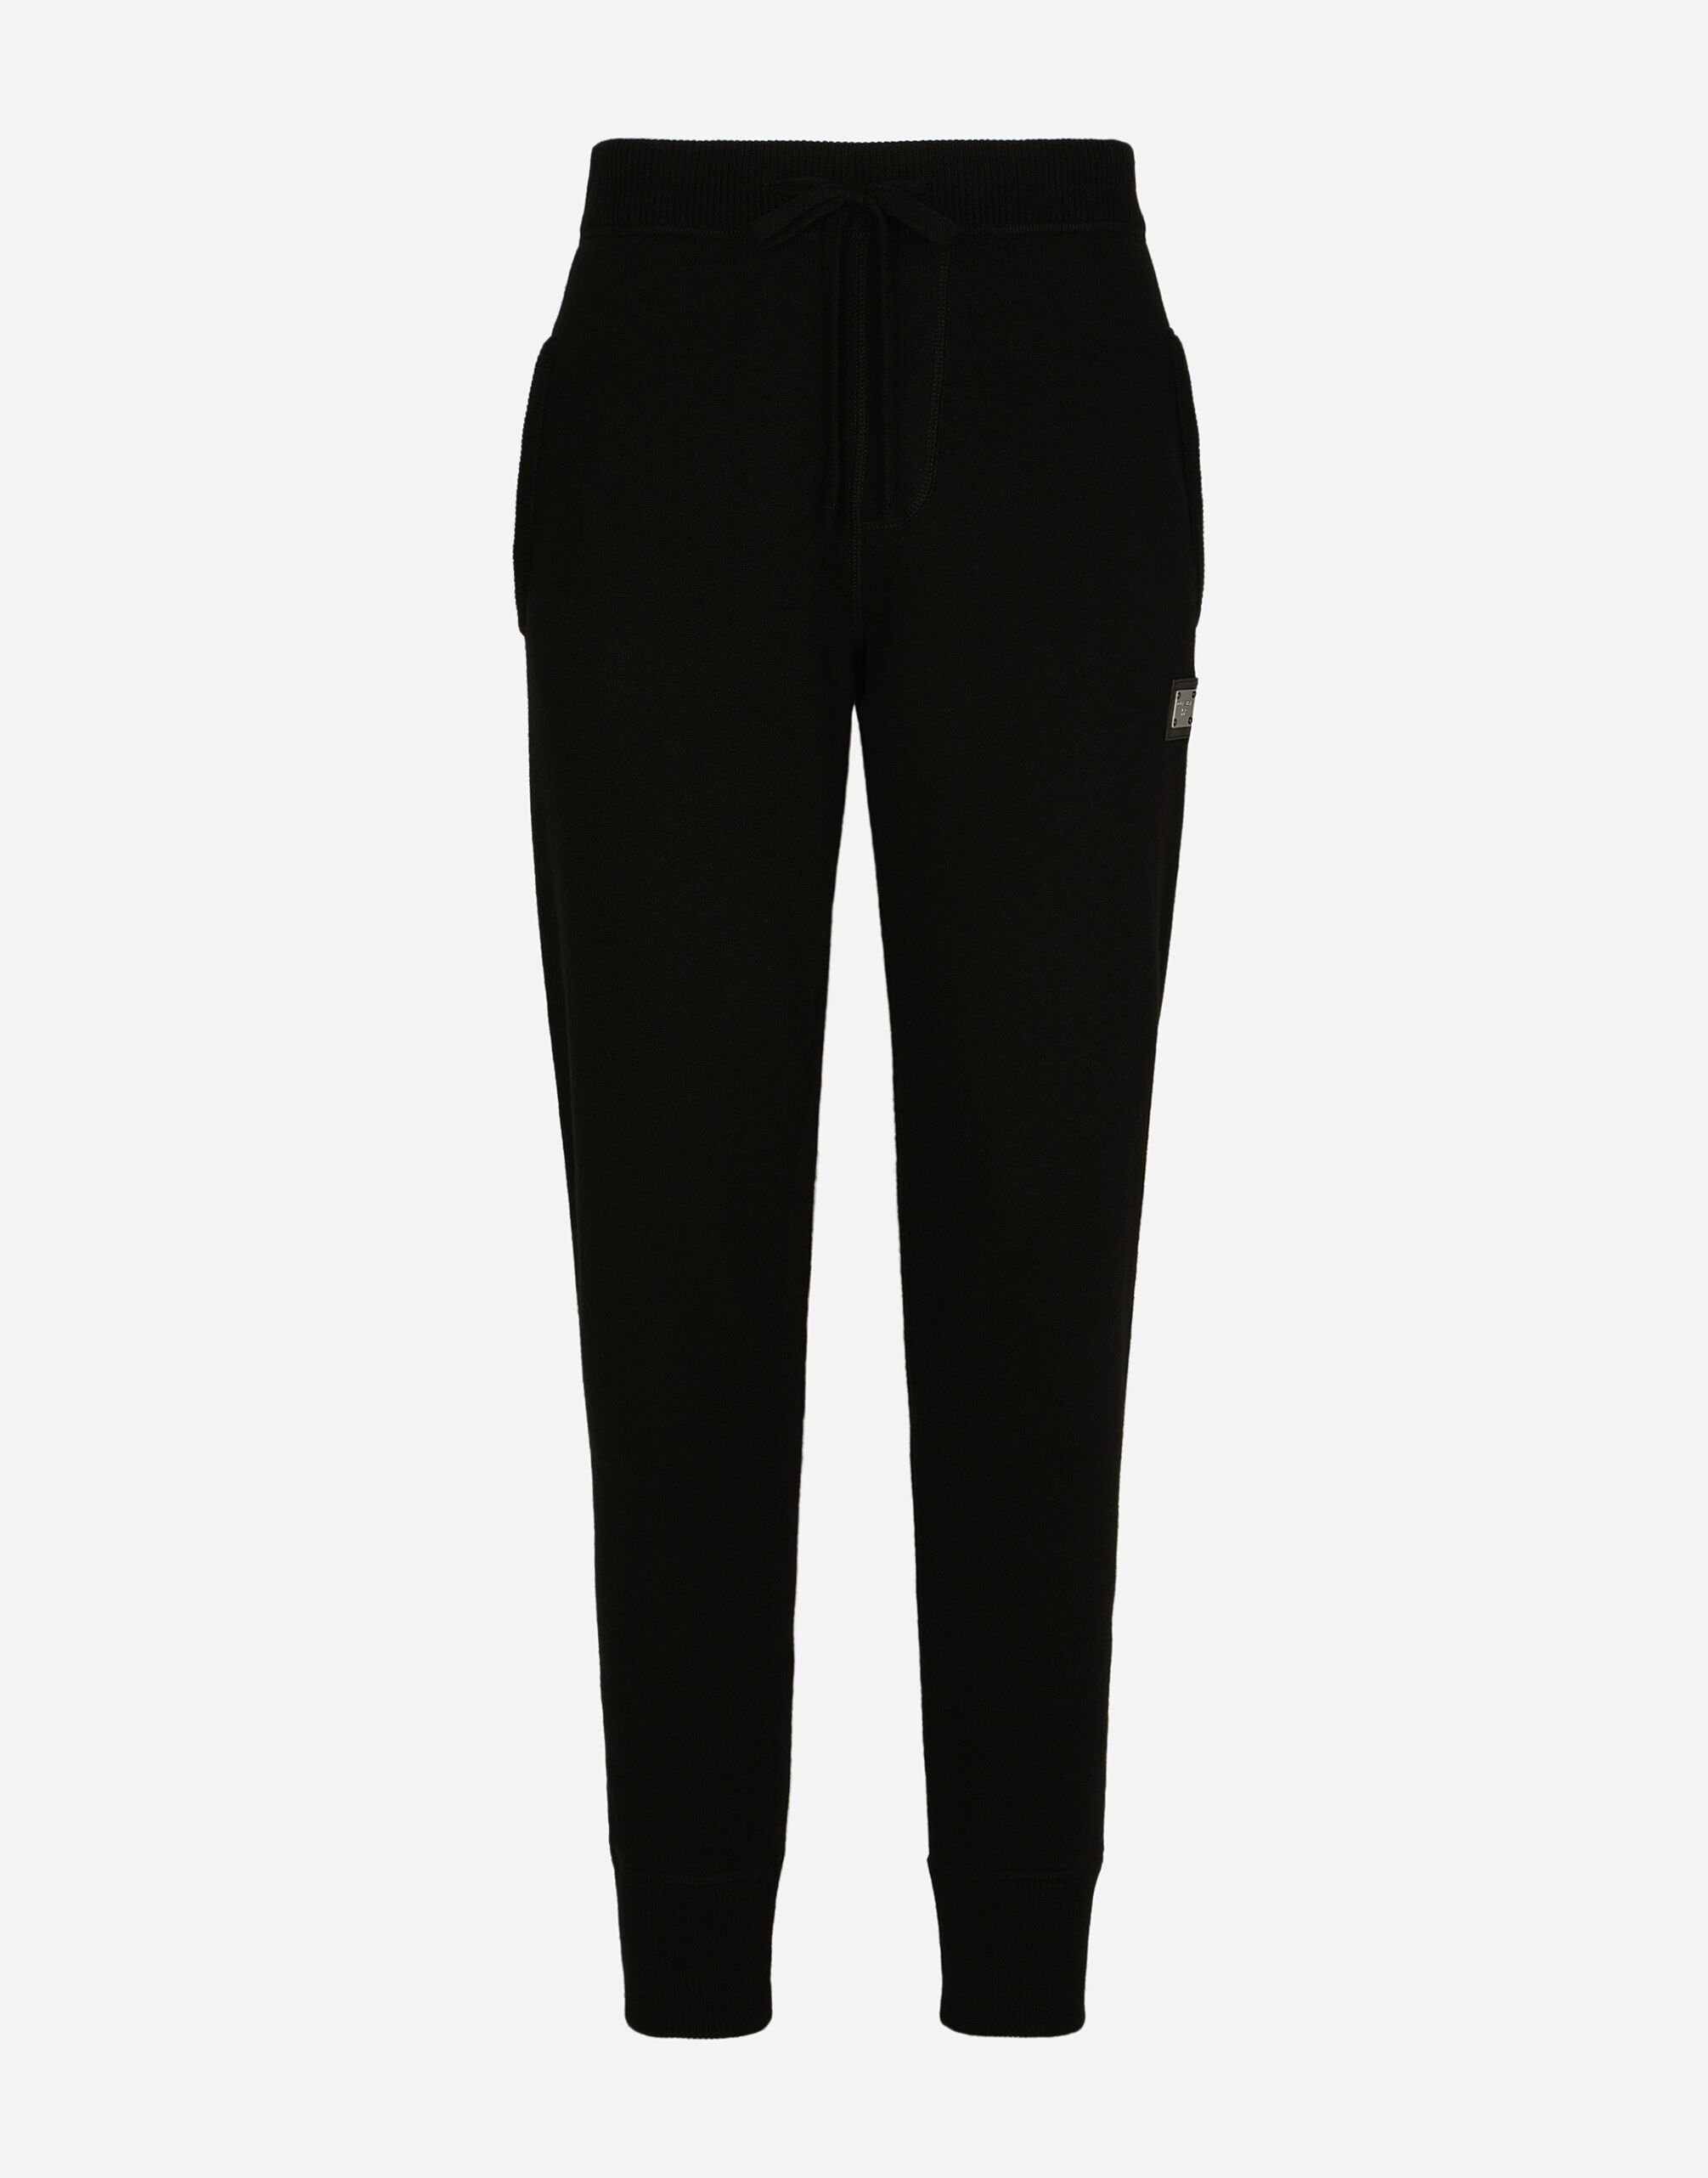 Dolce & Gabbana Wool and cashmere knit jogging pants Black VG6184VN187